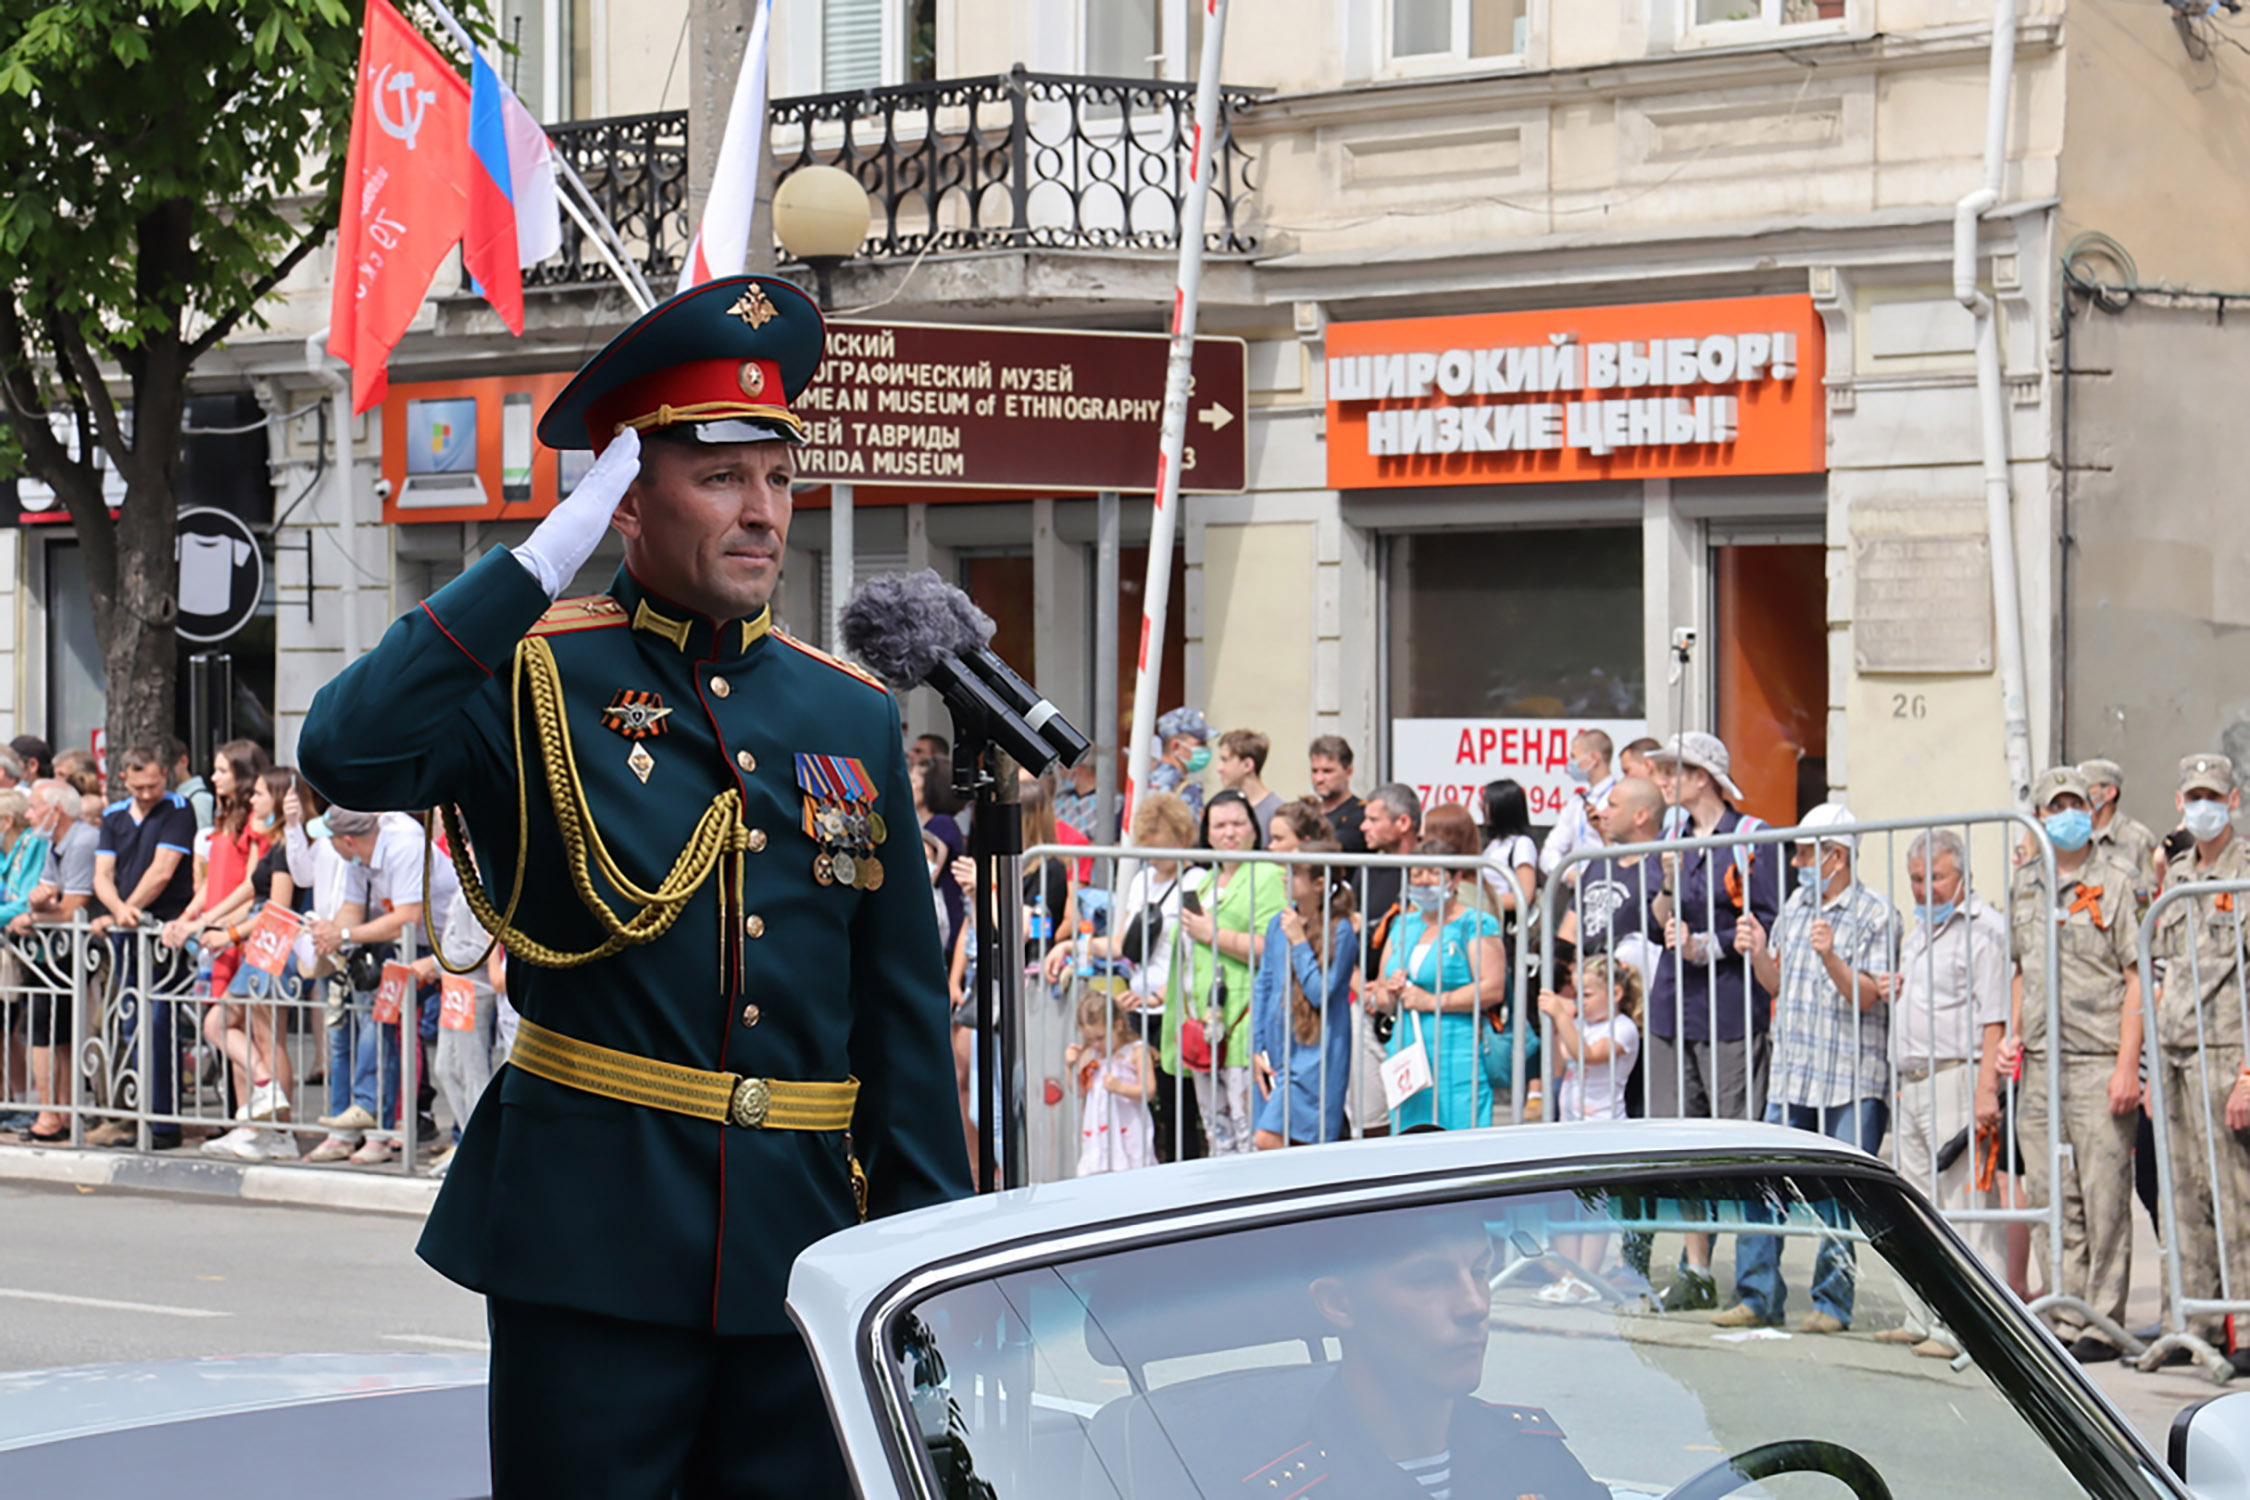 Generalmajor Iwan Popow befand sich bereits in Haft